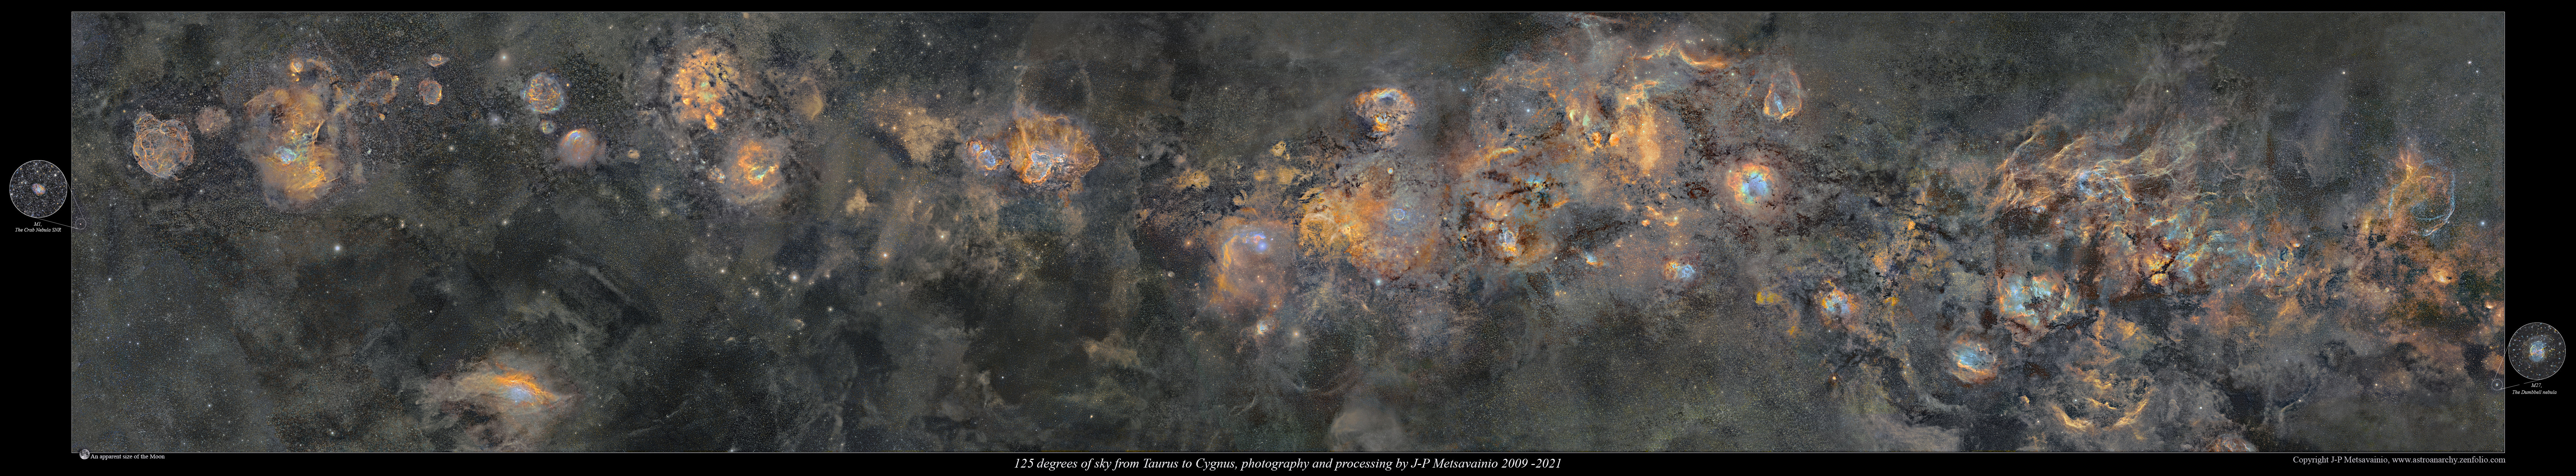 General 7023x1299 galaxy Milky Way night sky nebula stars space